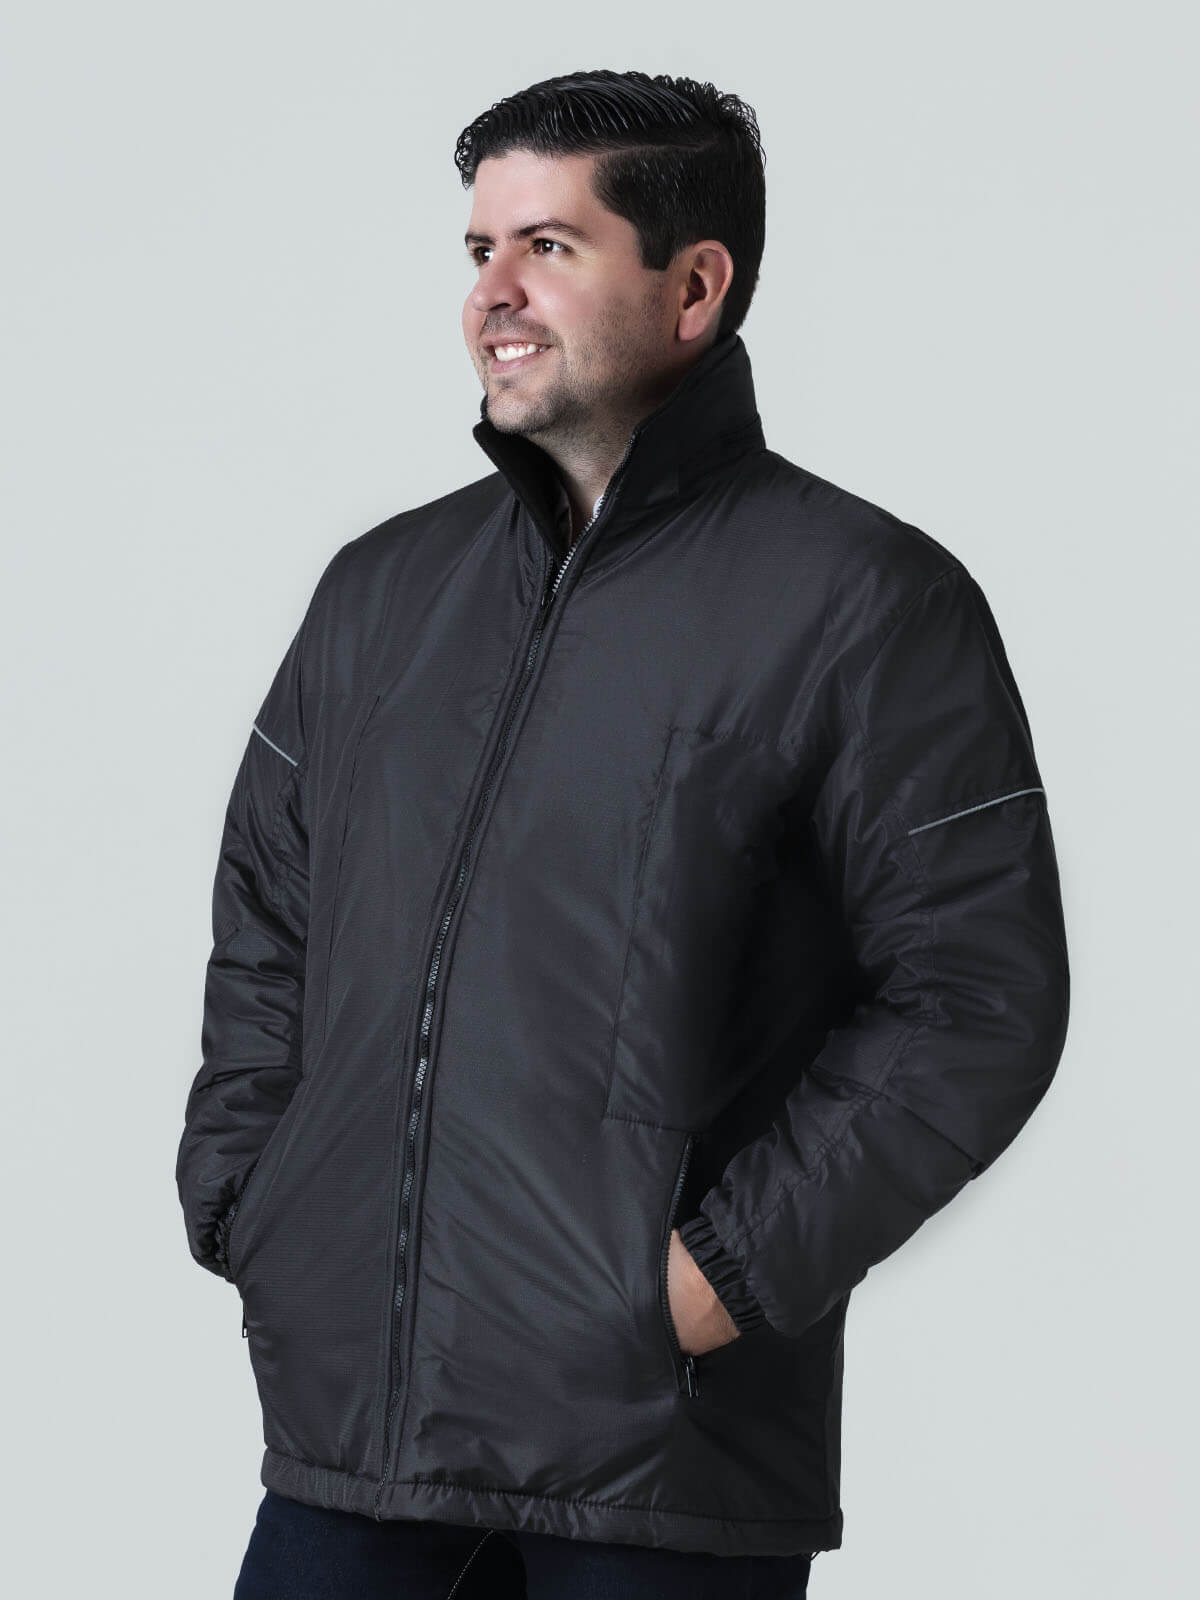 Extreme cold jacket alaska